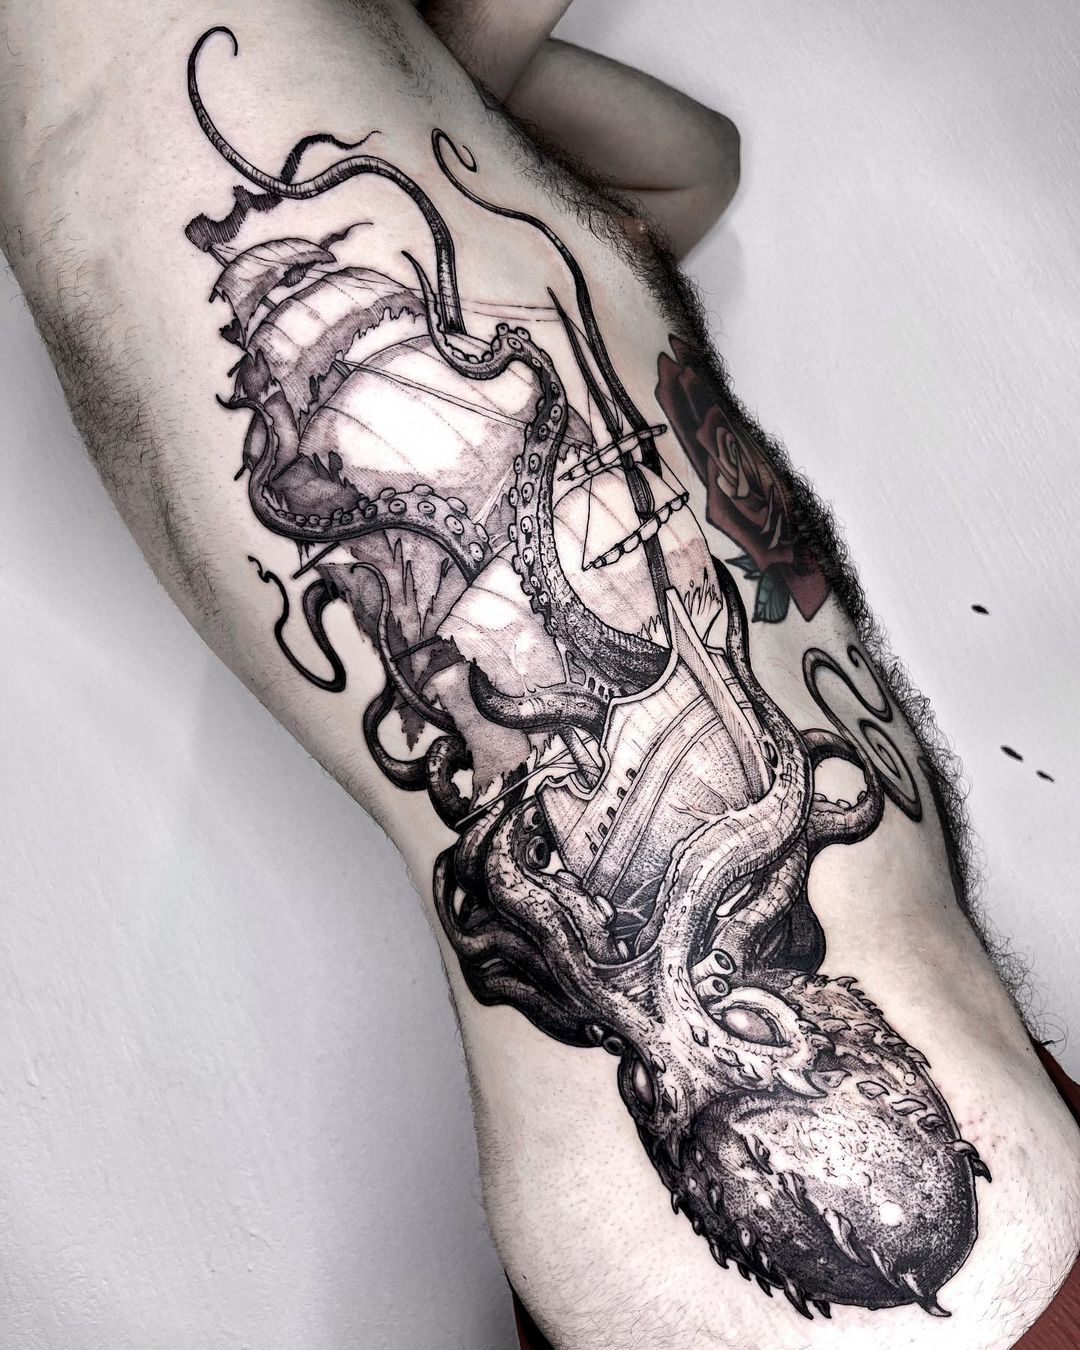 Kraken Sleeve Tattoo by DanielPokorny on DeviantArt